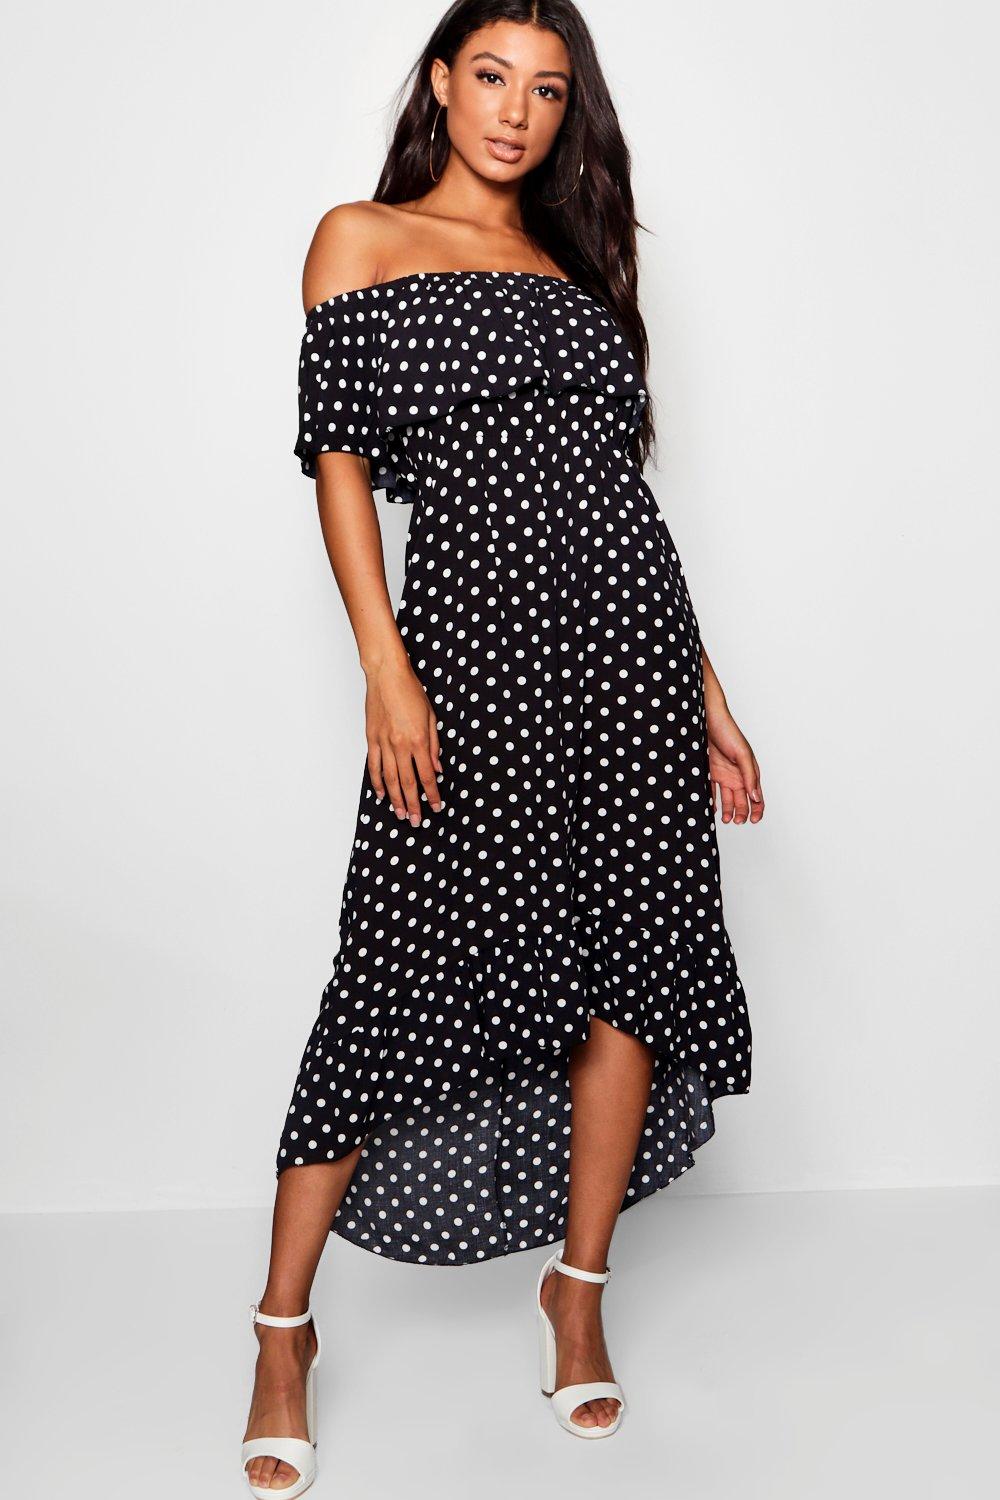 Woven Polka Dot Print Bardot Maxi Dress | Women's Maxi Dress | Fashion ...